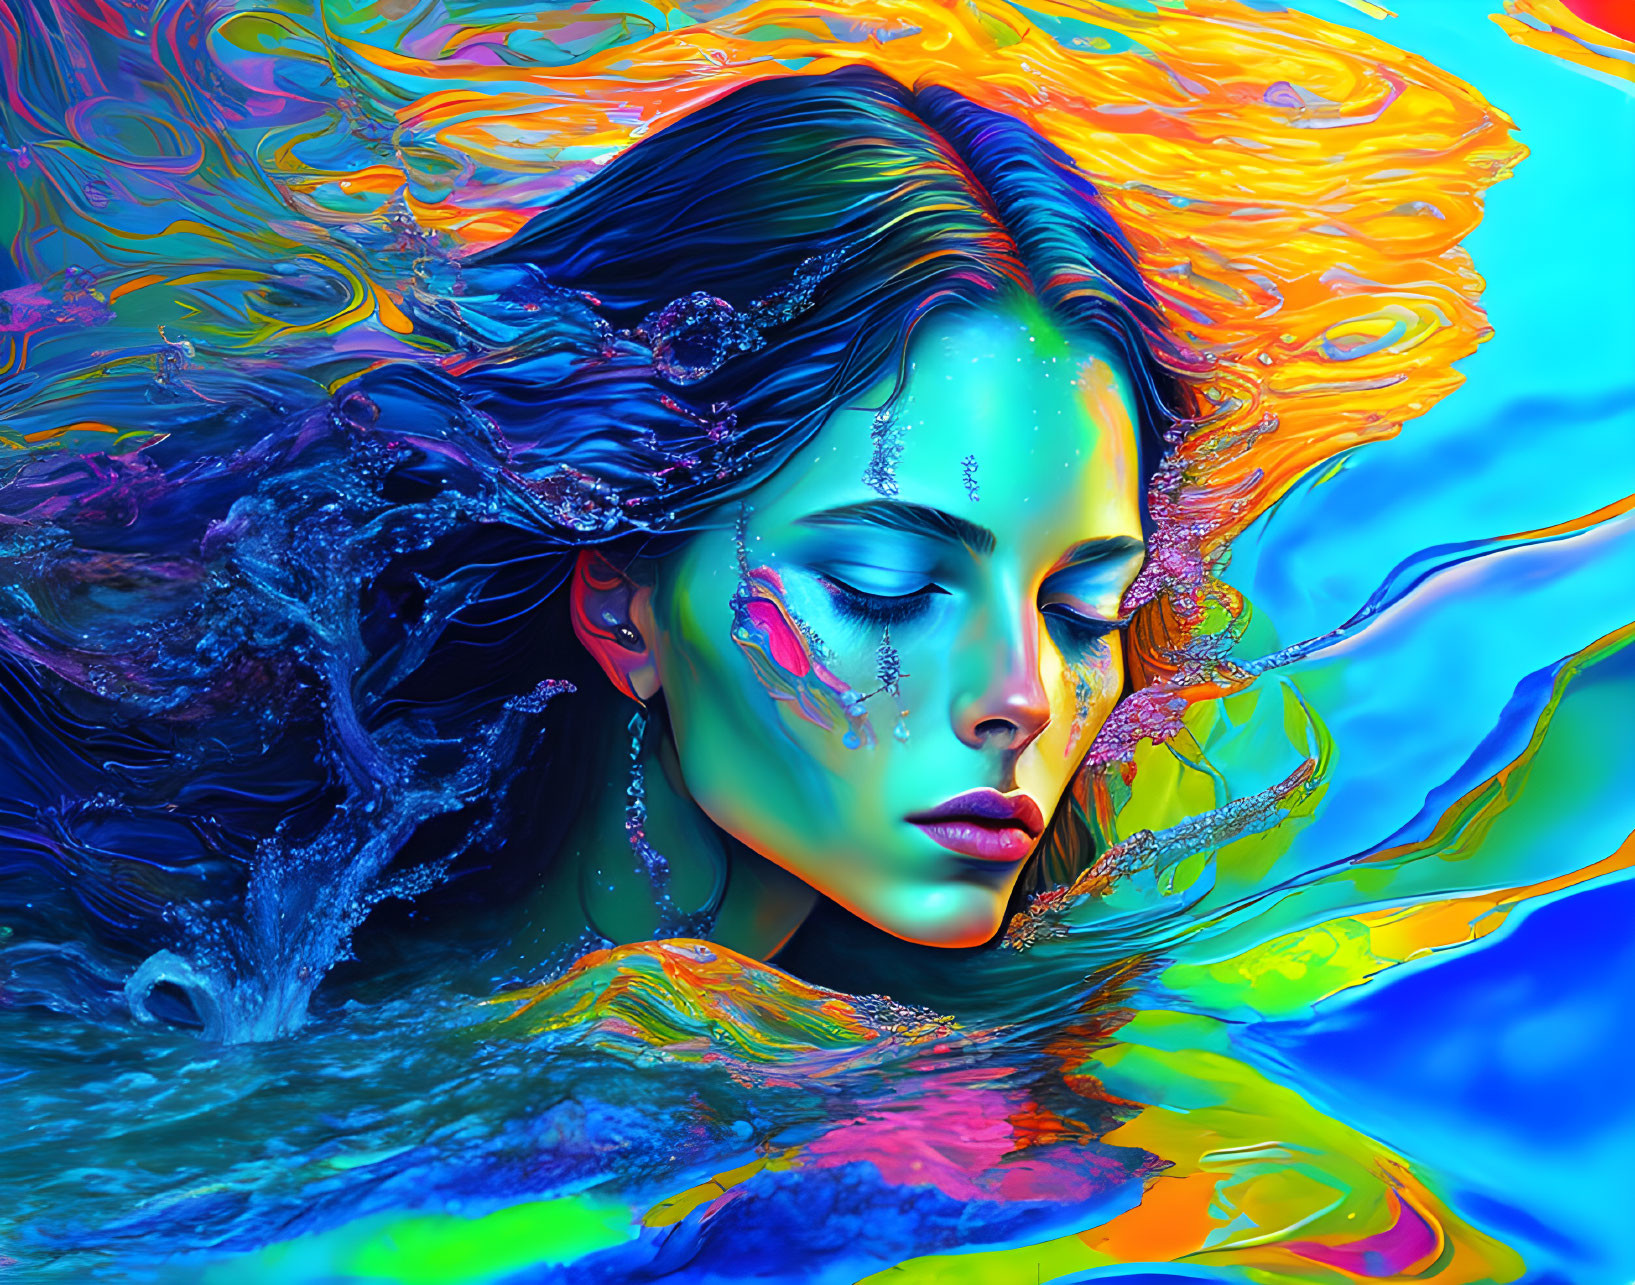 Vibrant digital artwork: Woman in water with flowing hair